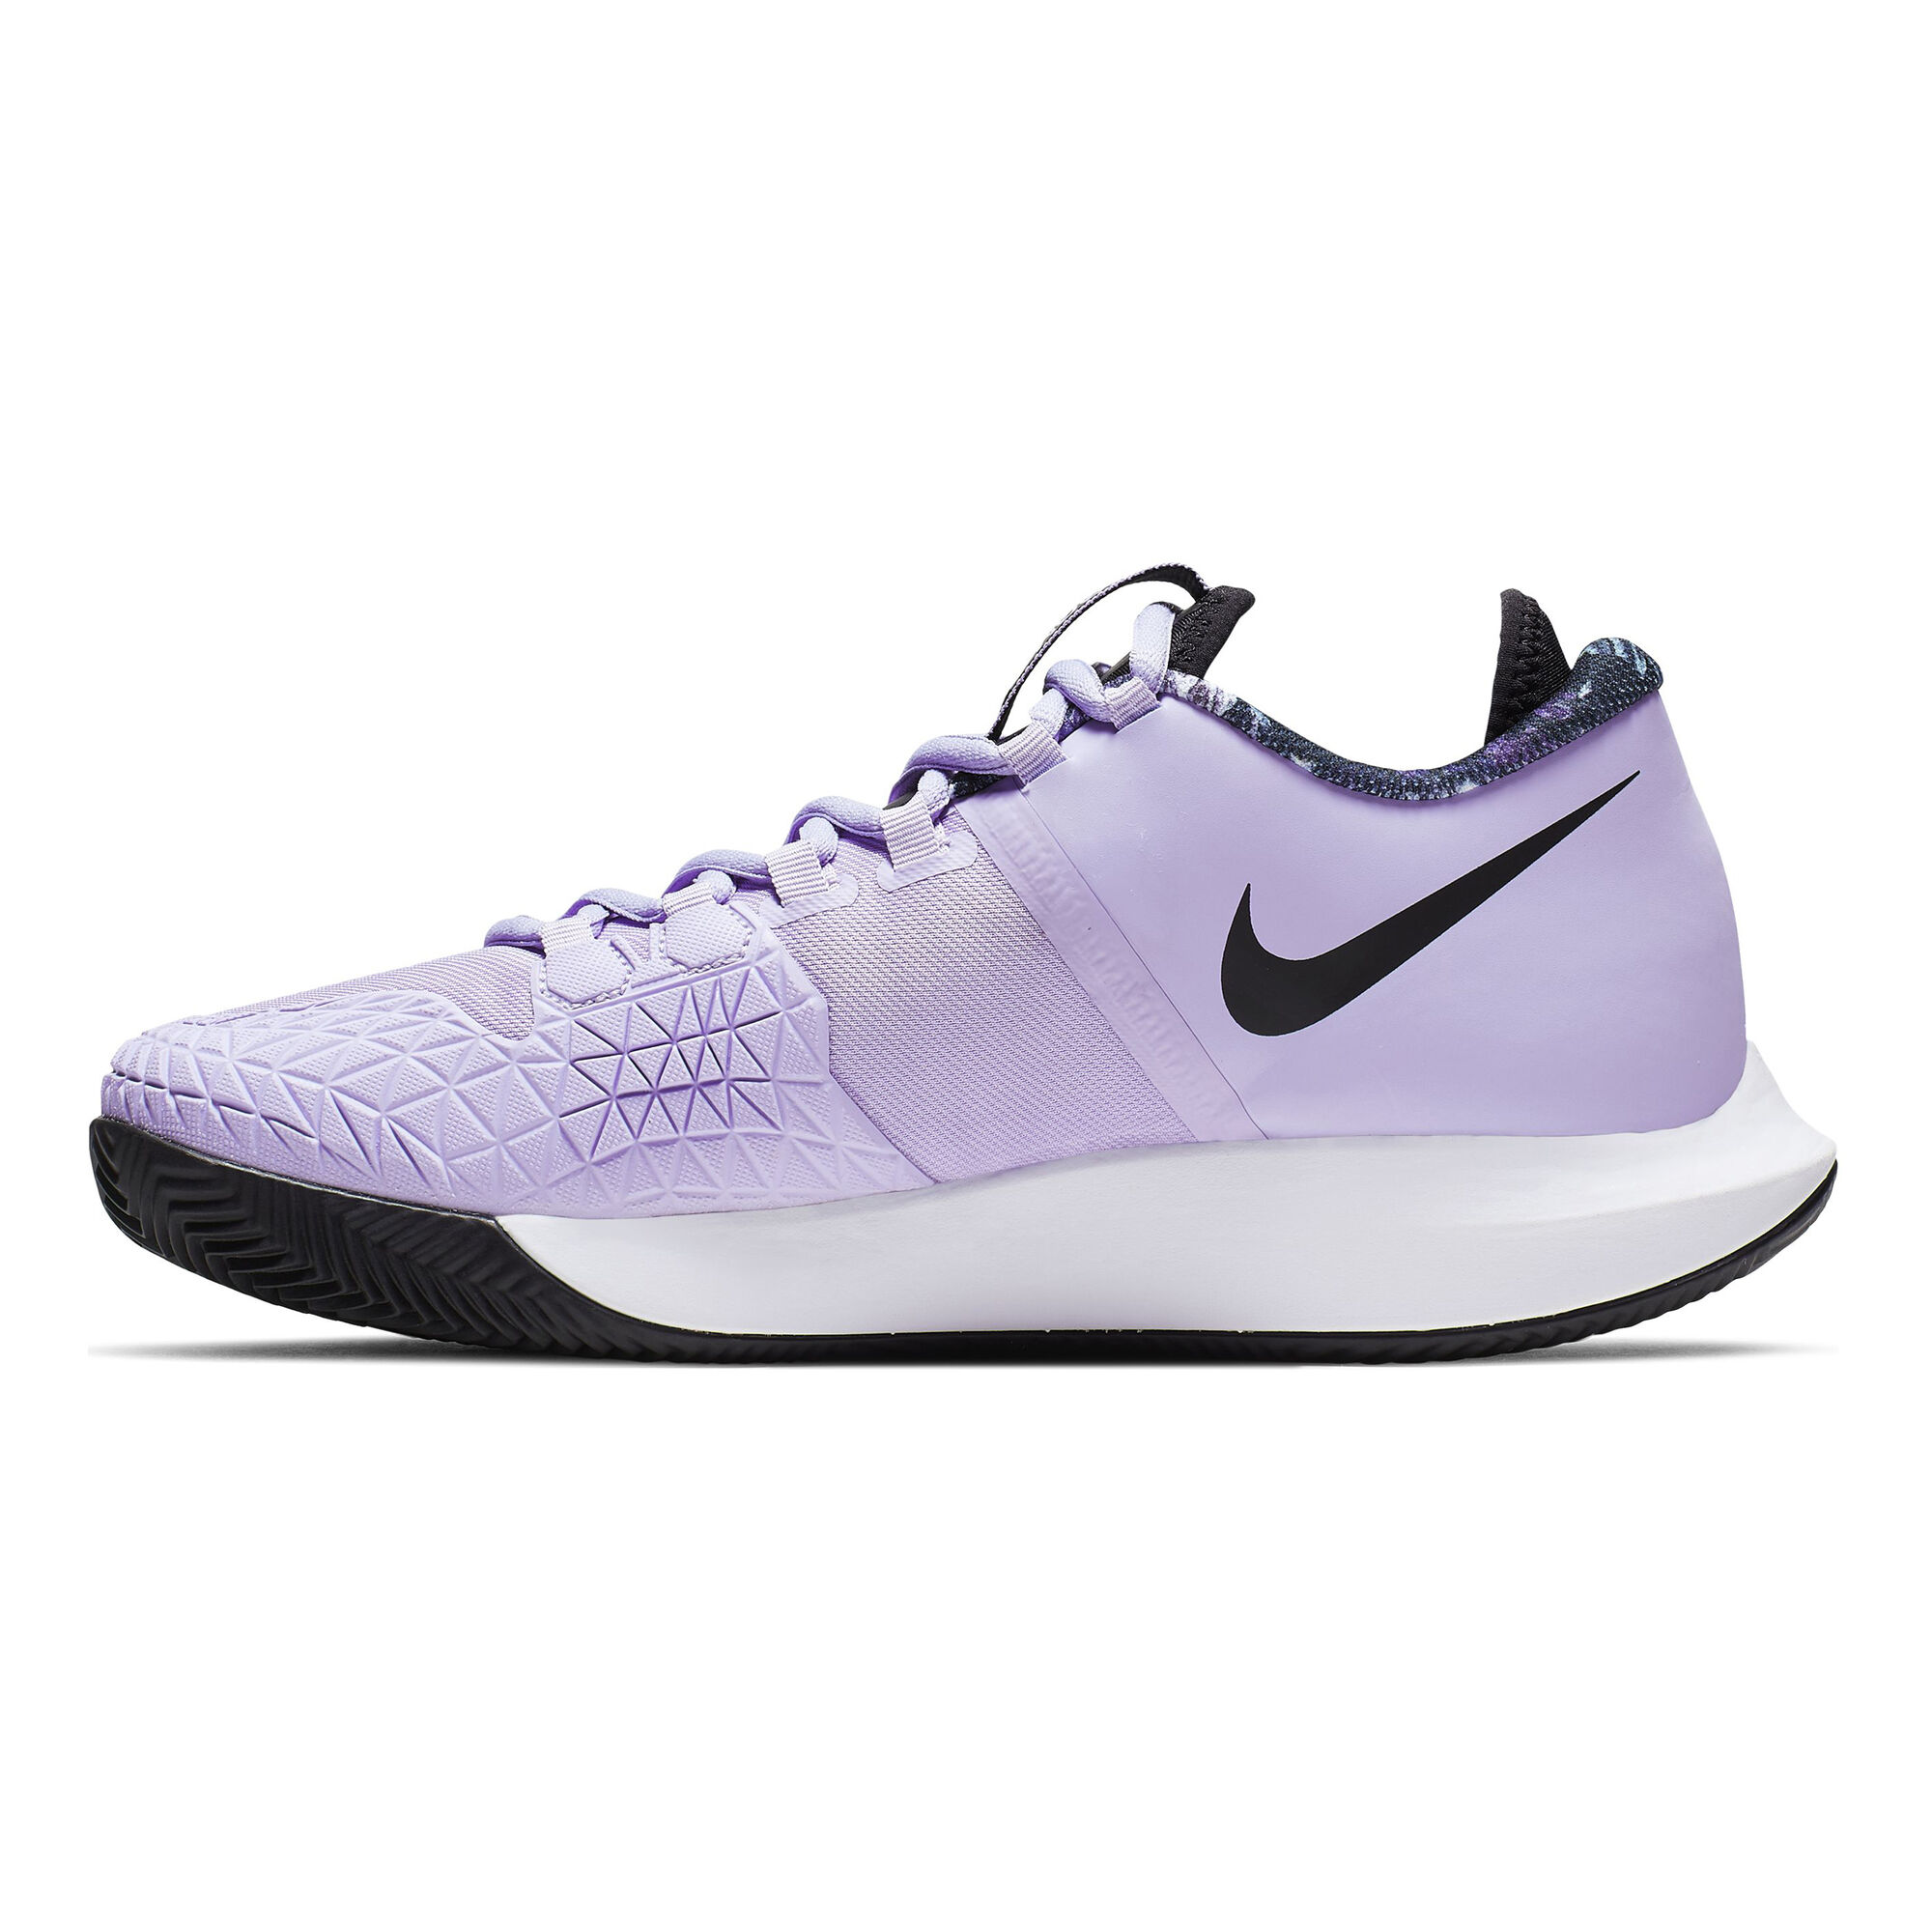 buy Nike Air Zoom Zero Clay Court Shoe Women Lilac Black online